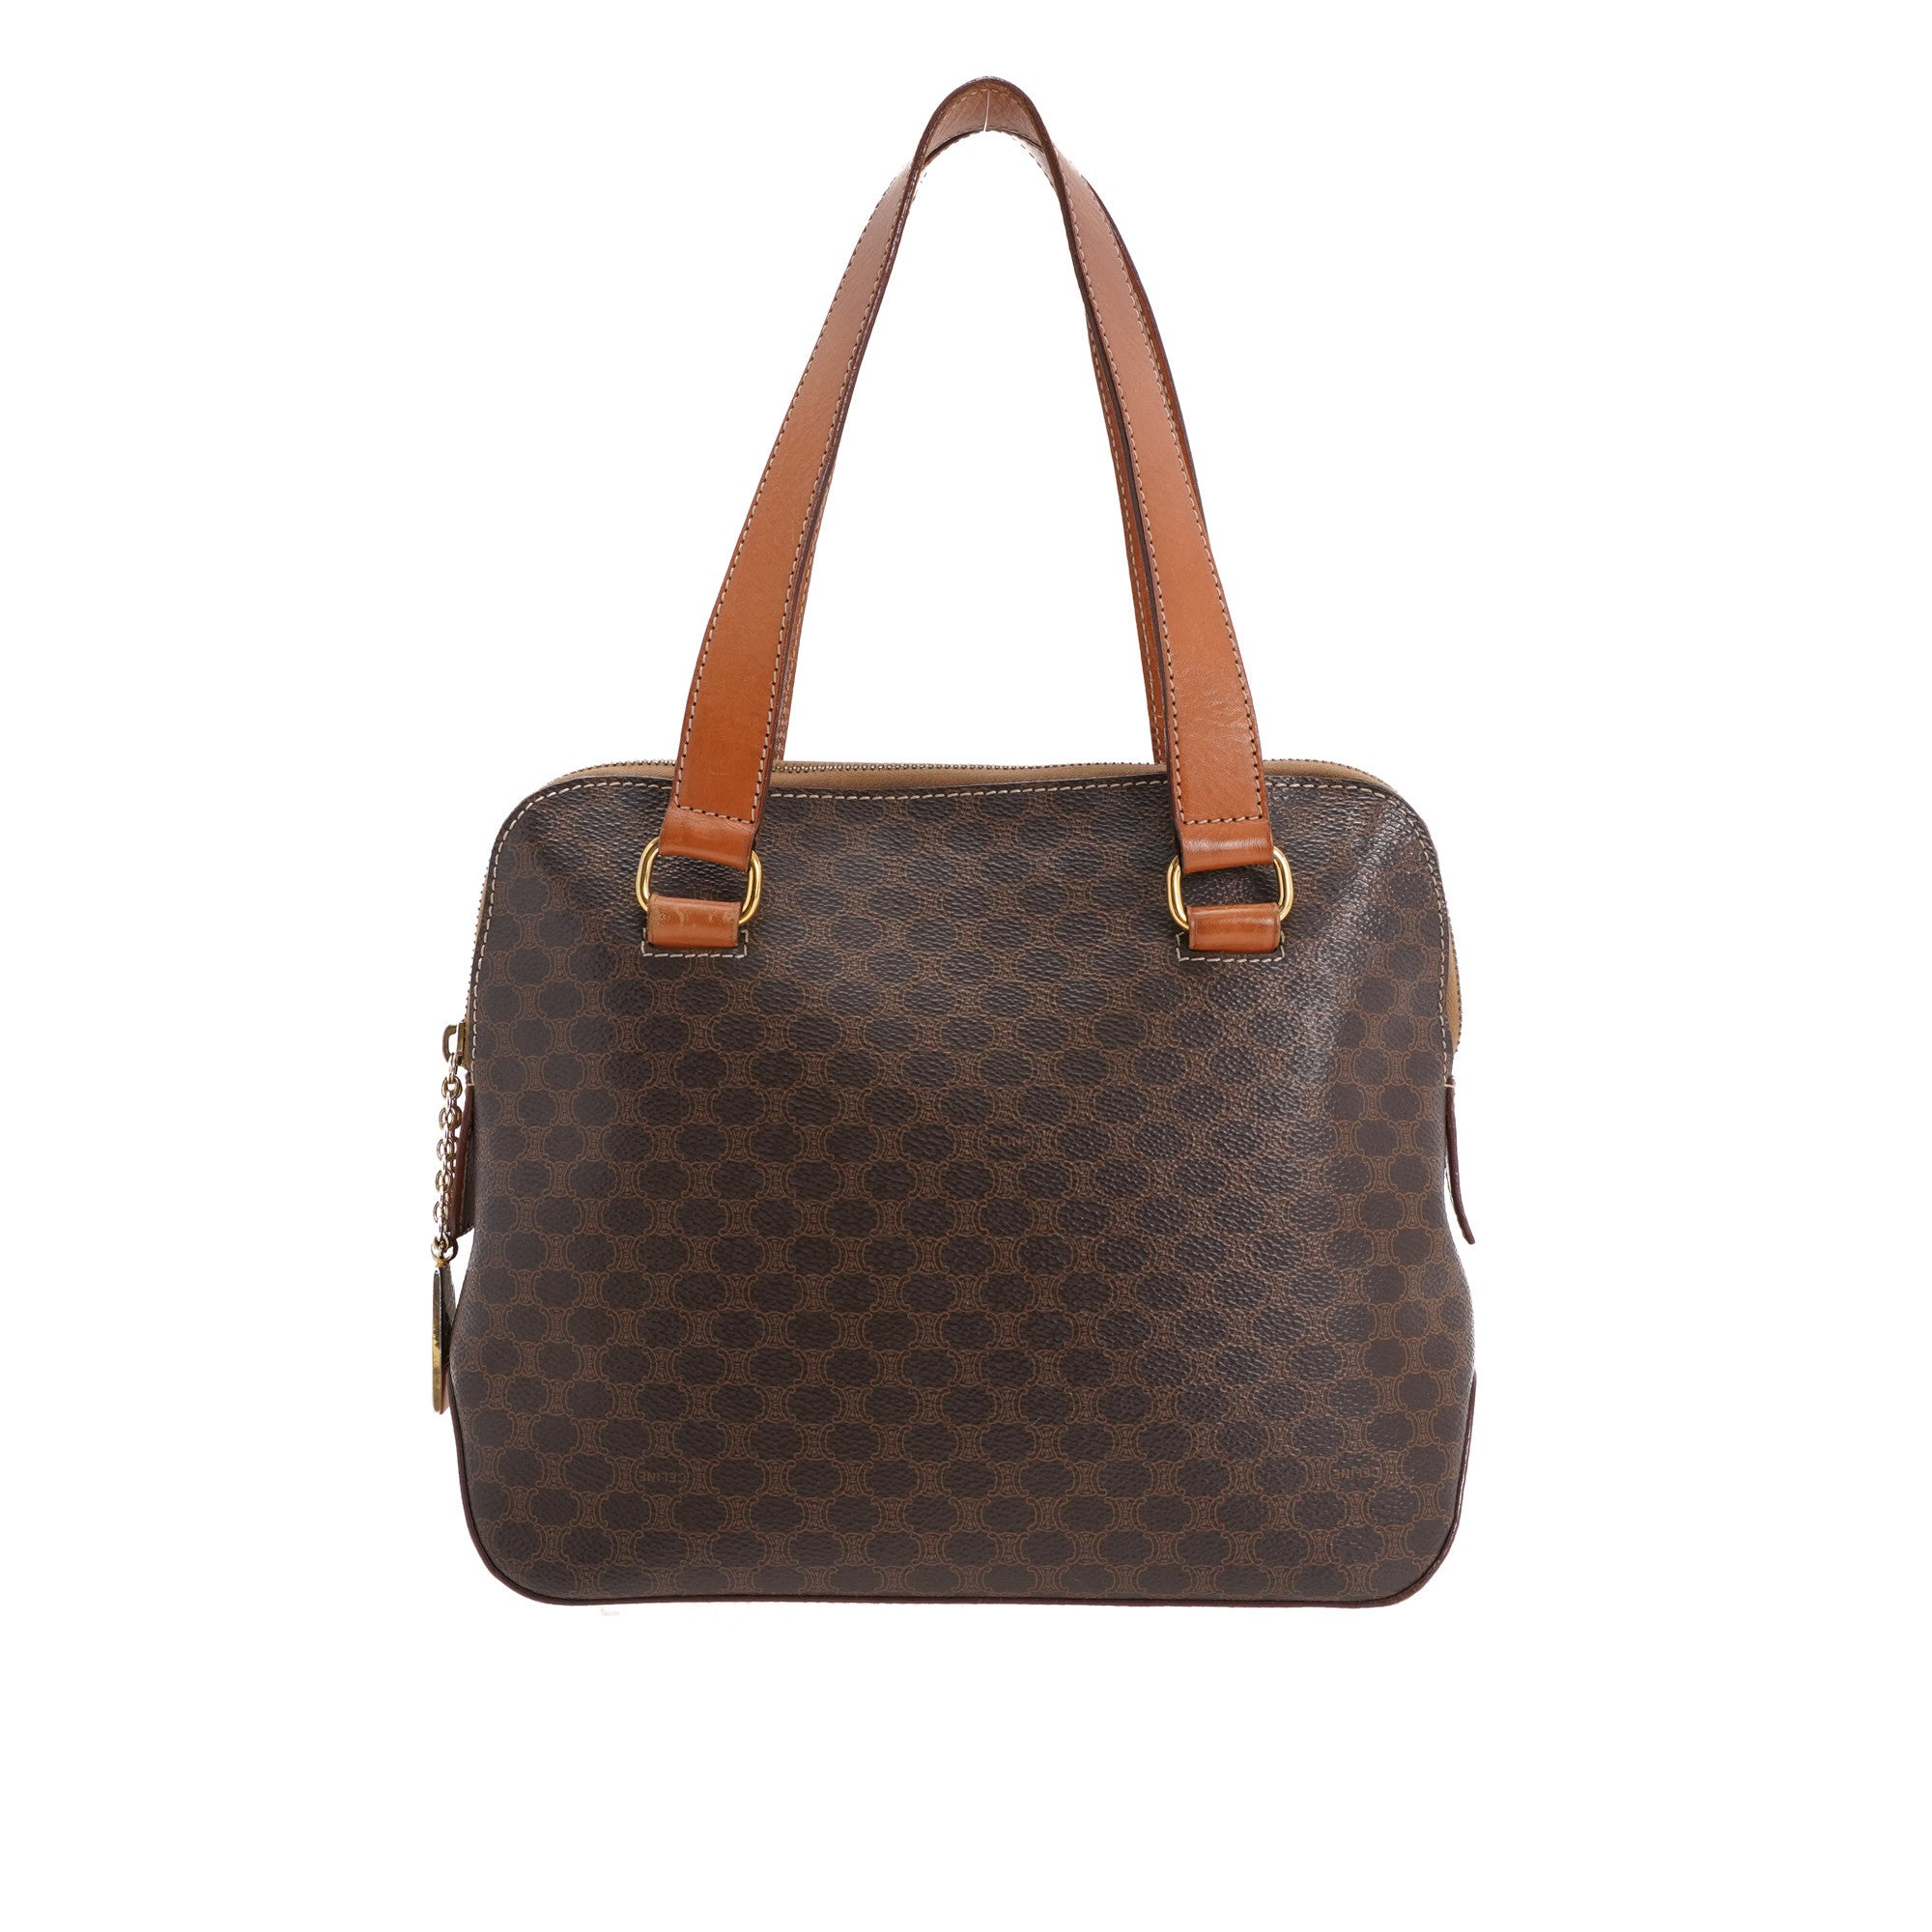 Celine | Authentic Used Bags & Handbags | LXR Canada